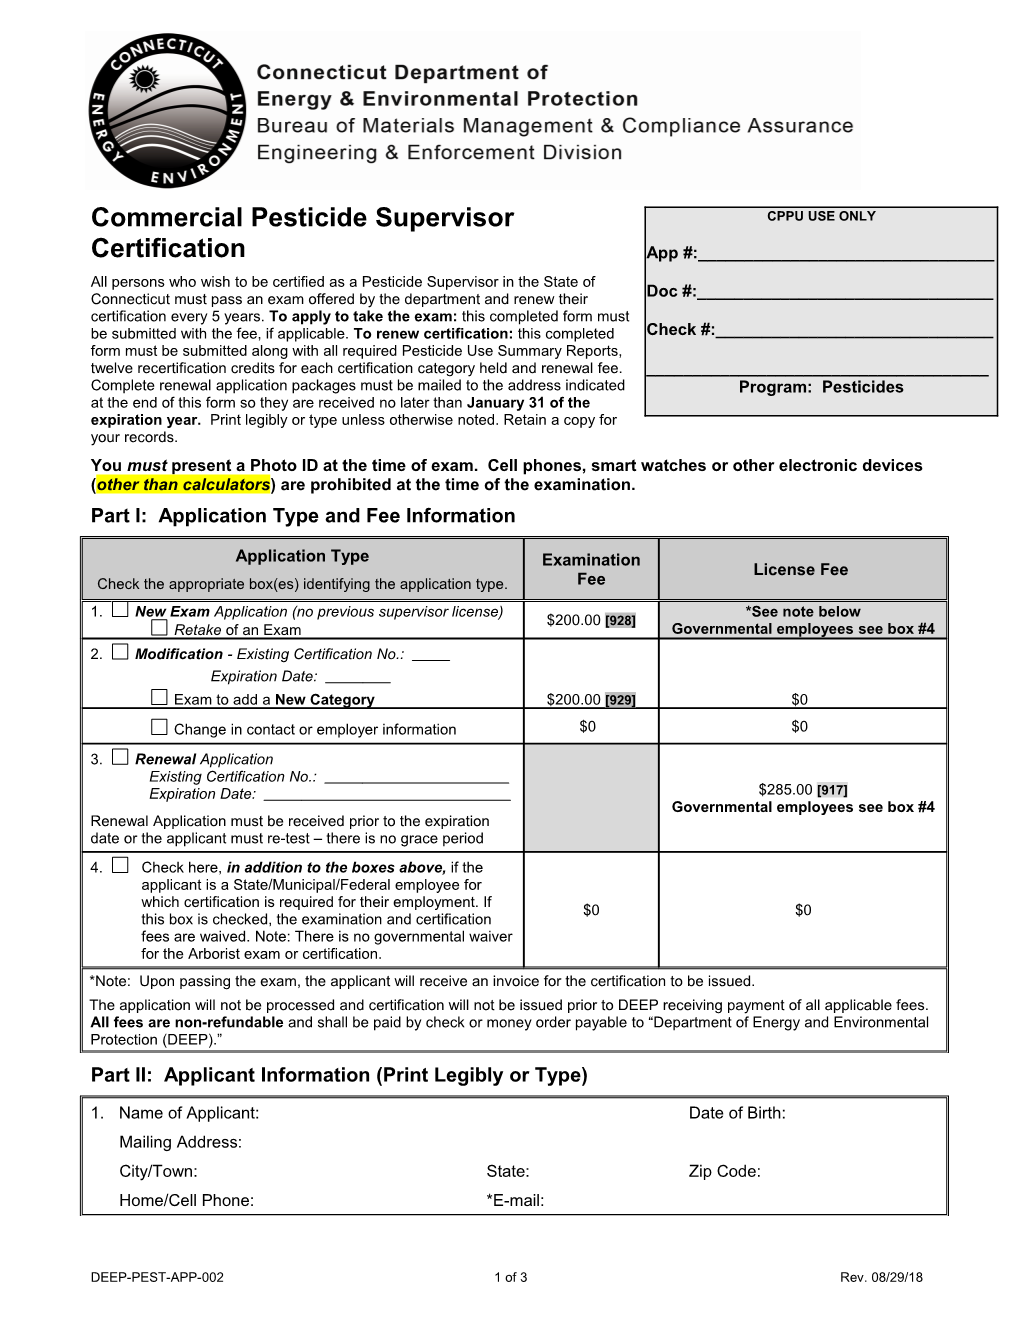 Commercial Pesticide Supervisor Certification